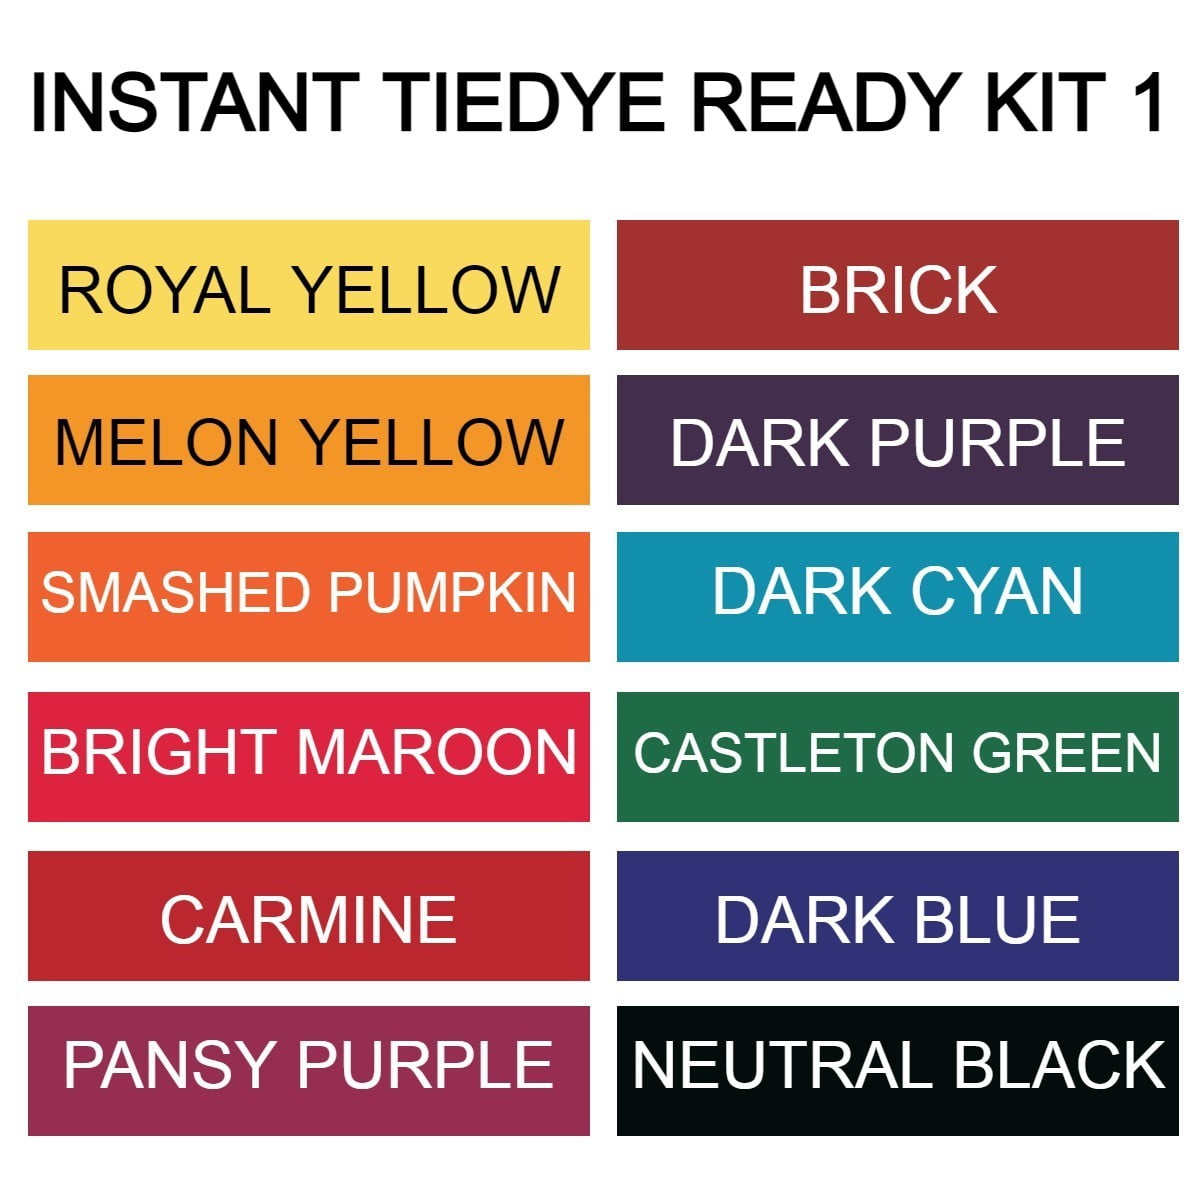  Instant Tiedye Ready Kit 1